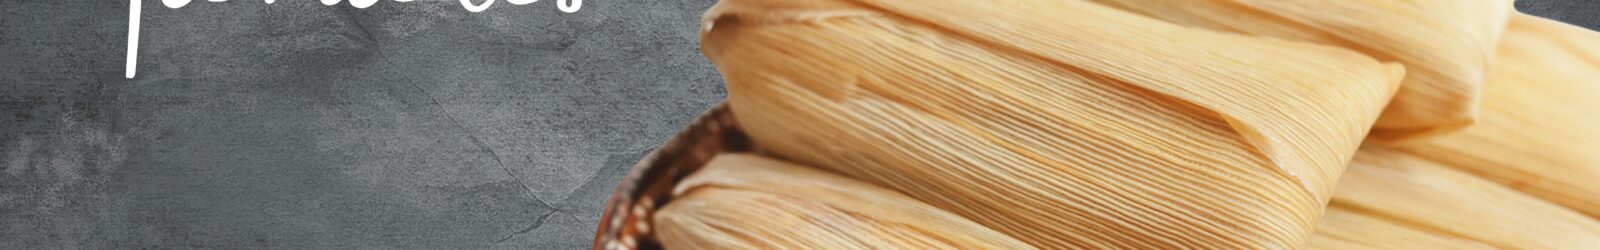 International Business Seminars - Recipe: How to make tamales